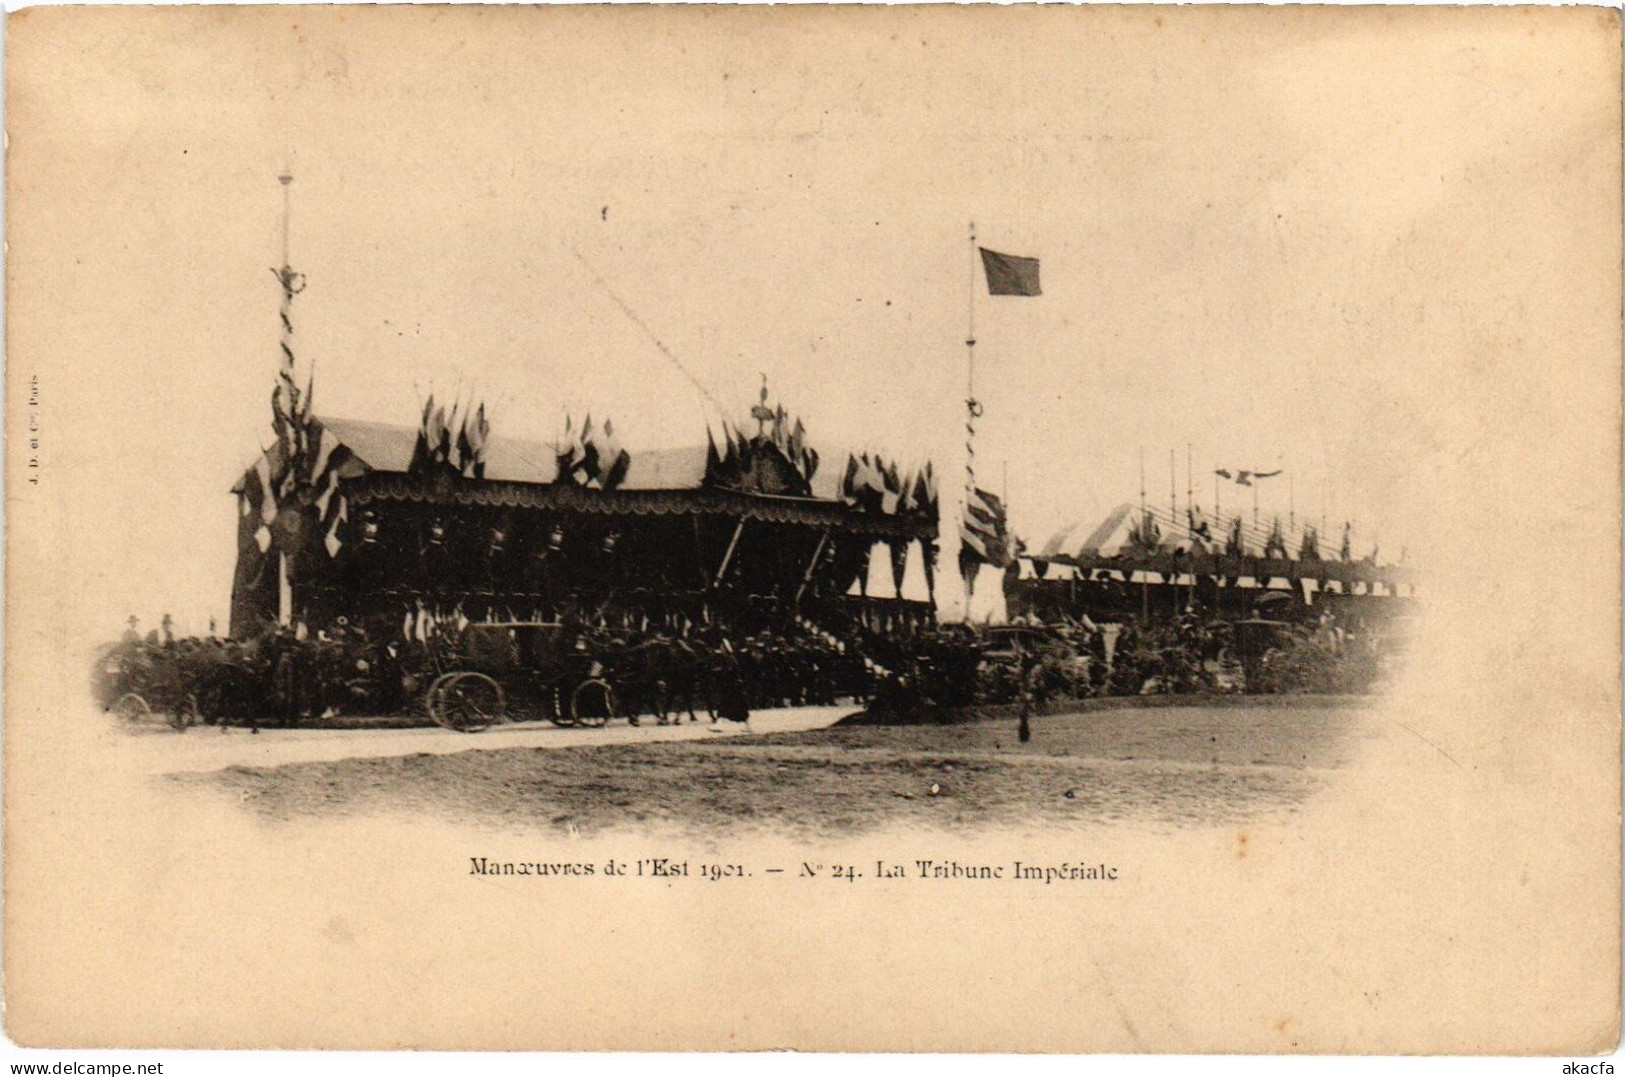 PC RUSSIA IMPERIAL VISIT IN FRANCE TIRBUNE IMPÉRIALE 1901 (a56616) - Königshäuser